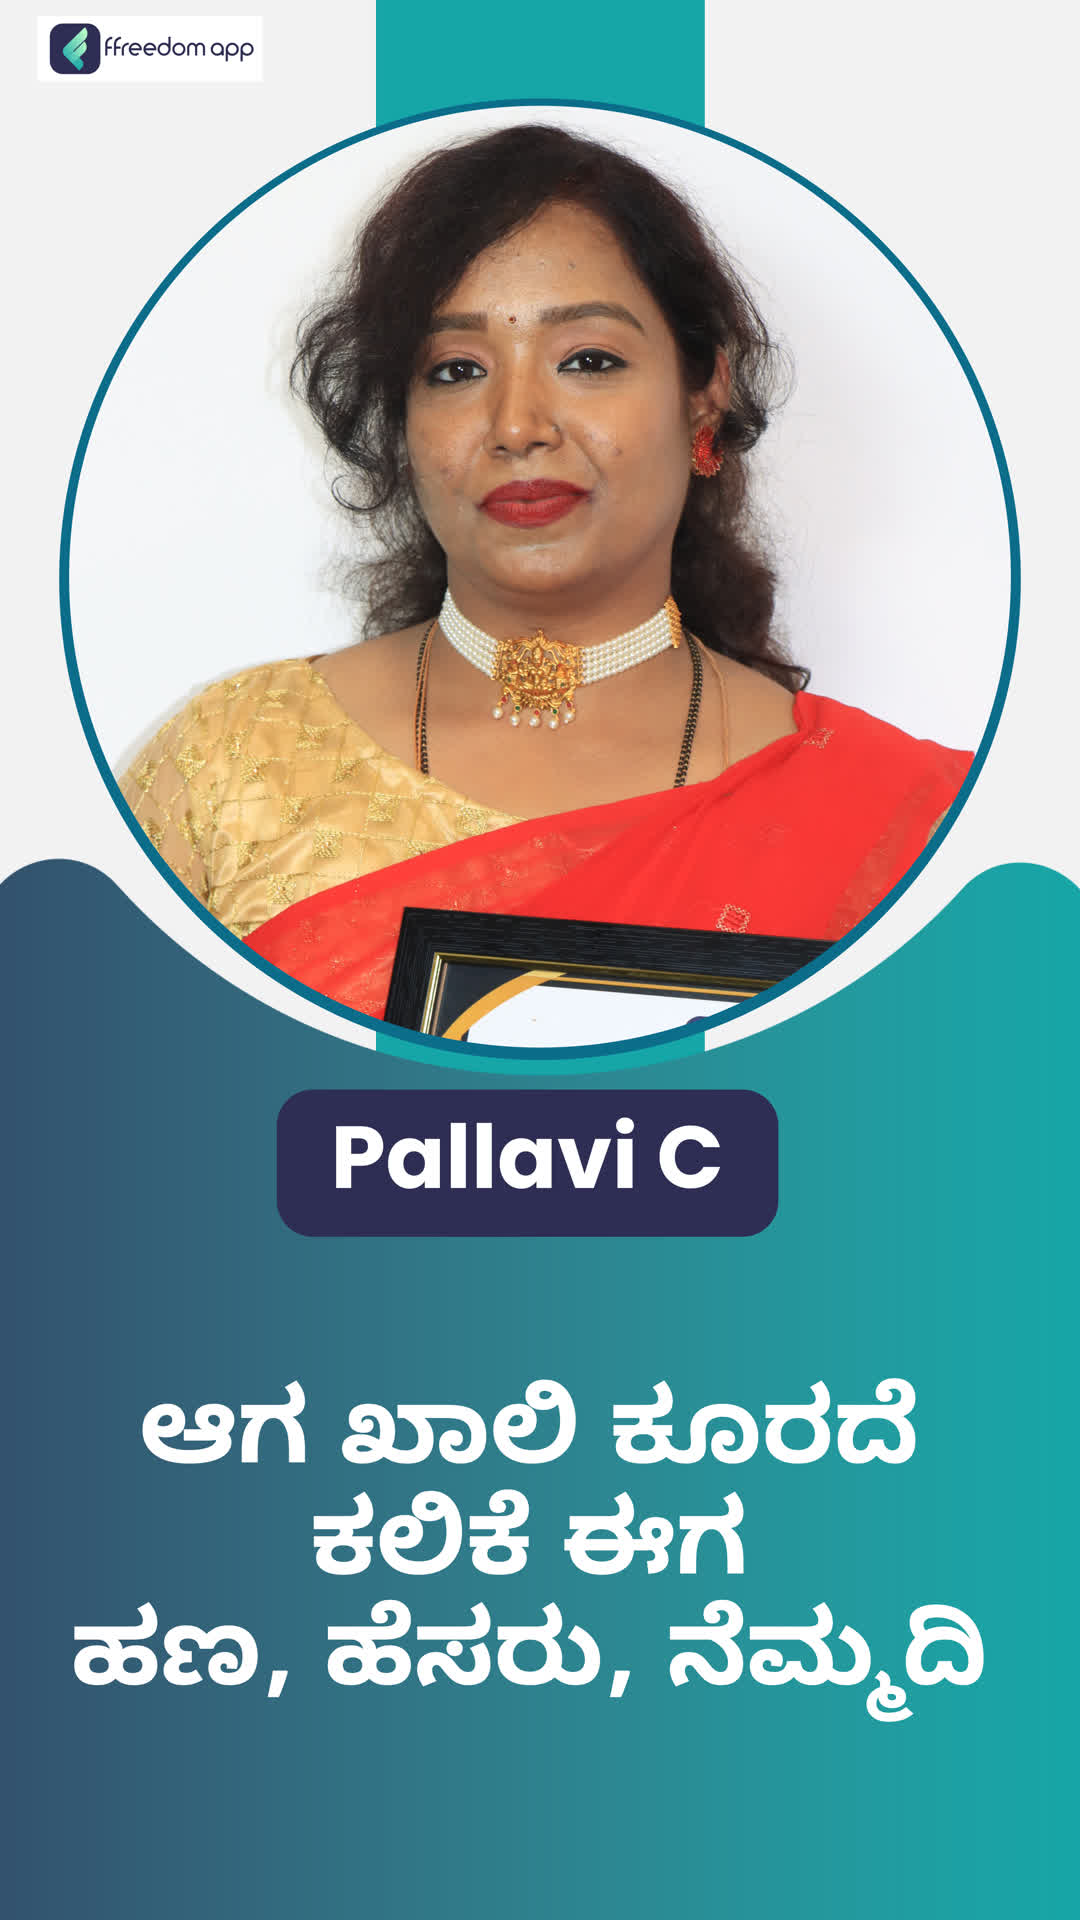 pallavi 's Honest Review of ffreedom app - Chamarajnagar ,Karnataka